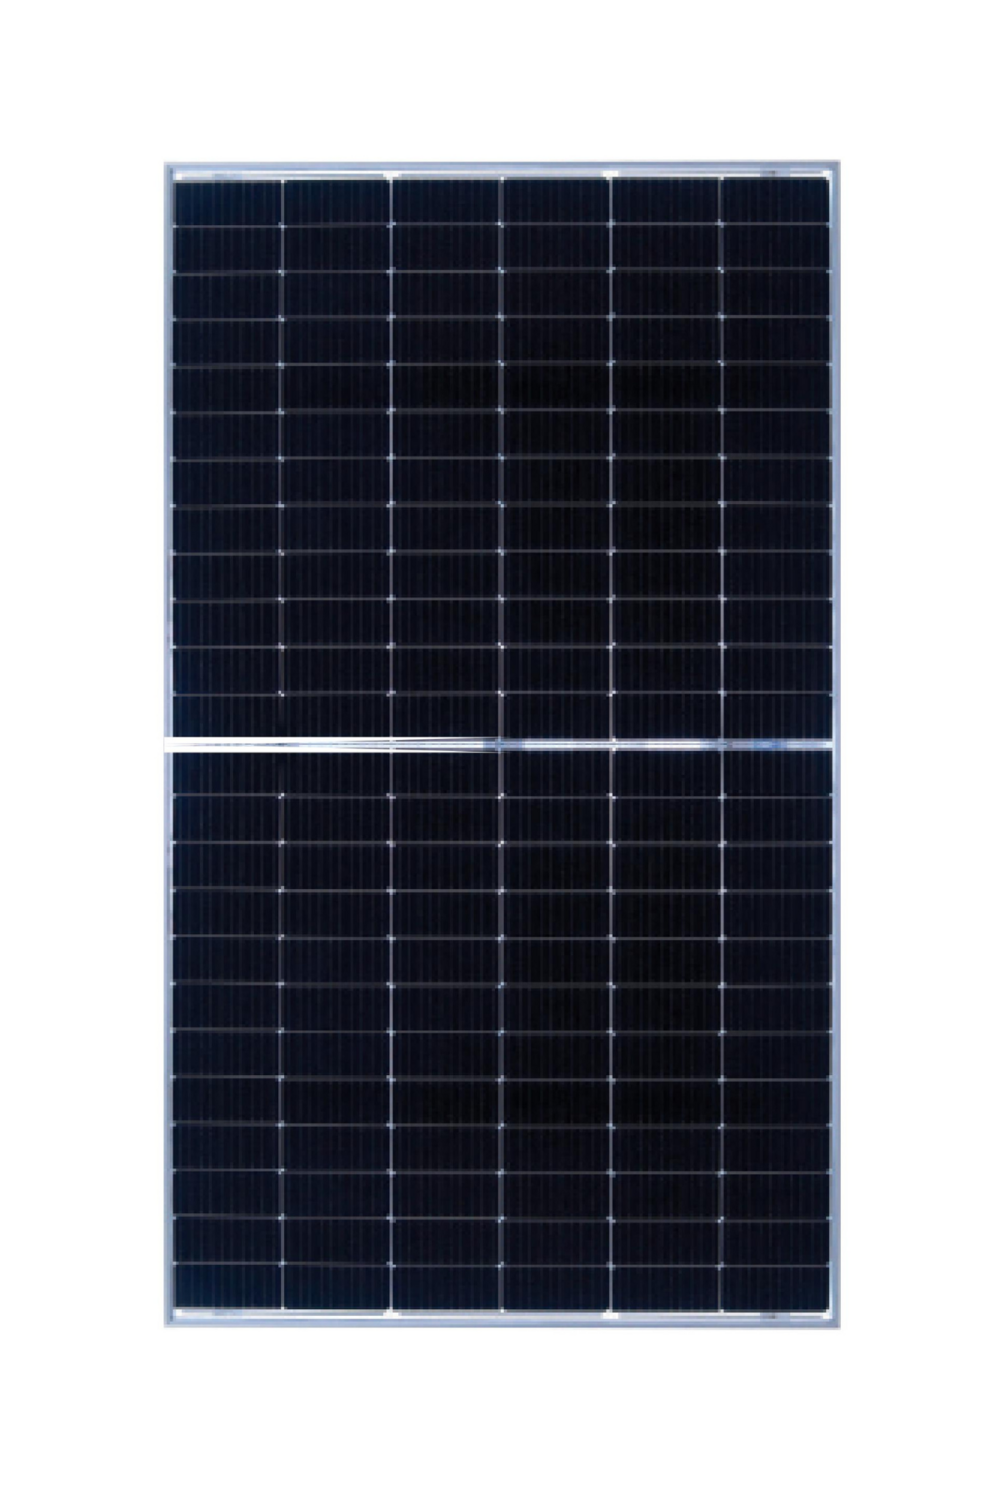 510 Watt DCR Mono Perc Solar Panel Made in India